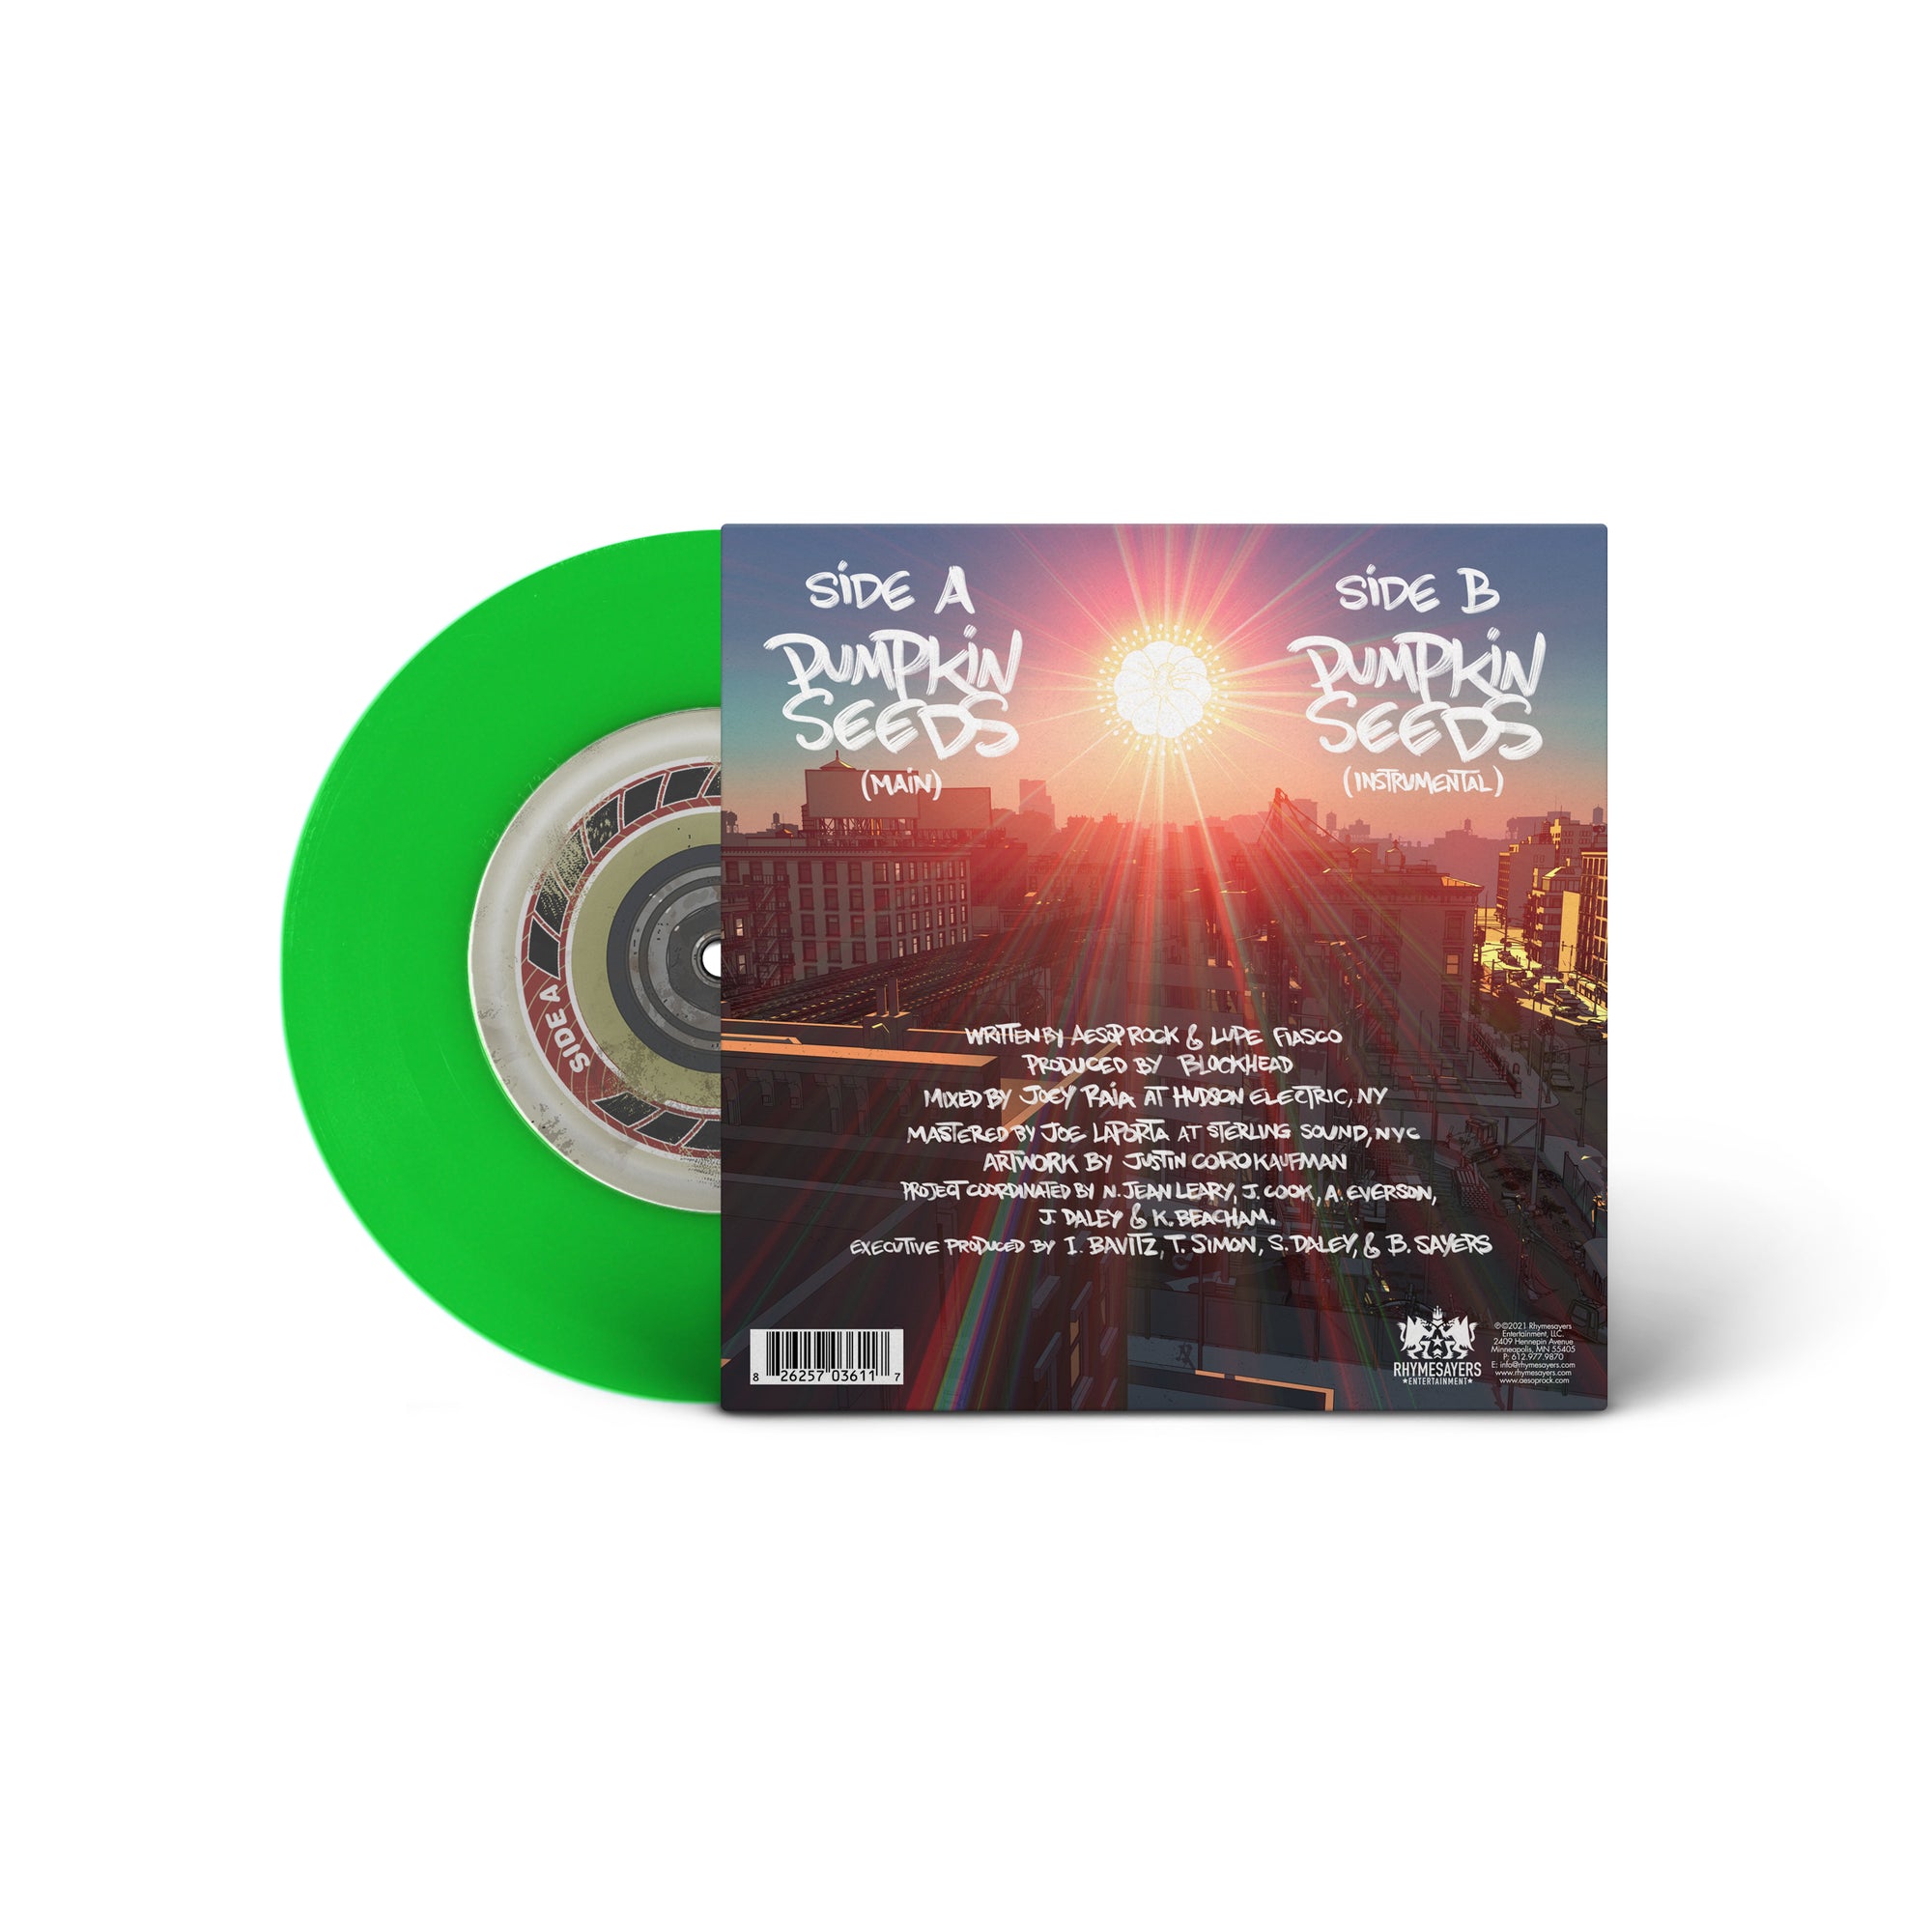 Rynke panden Conform punktum Aesop Rock x Blockhead "Pumpkin Seeds feat. Lupe Fiasco” 7" Vinyl -  Rhymesayers Entertainment